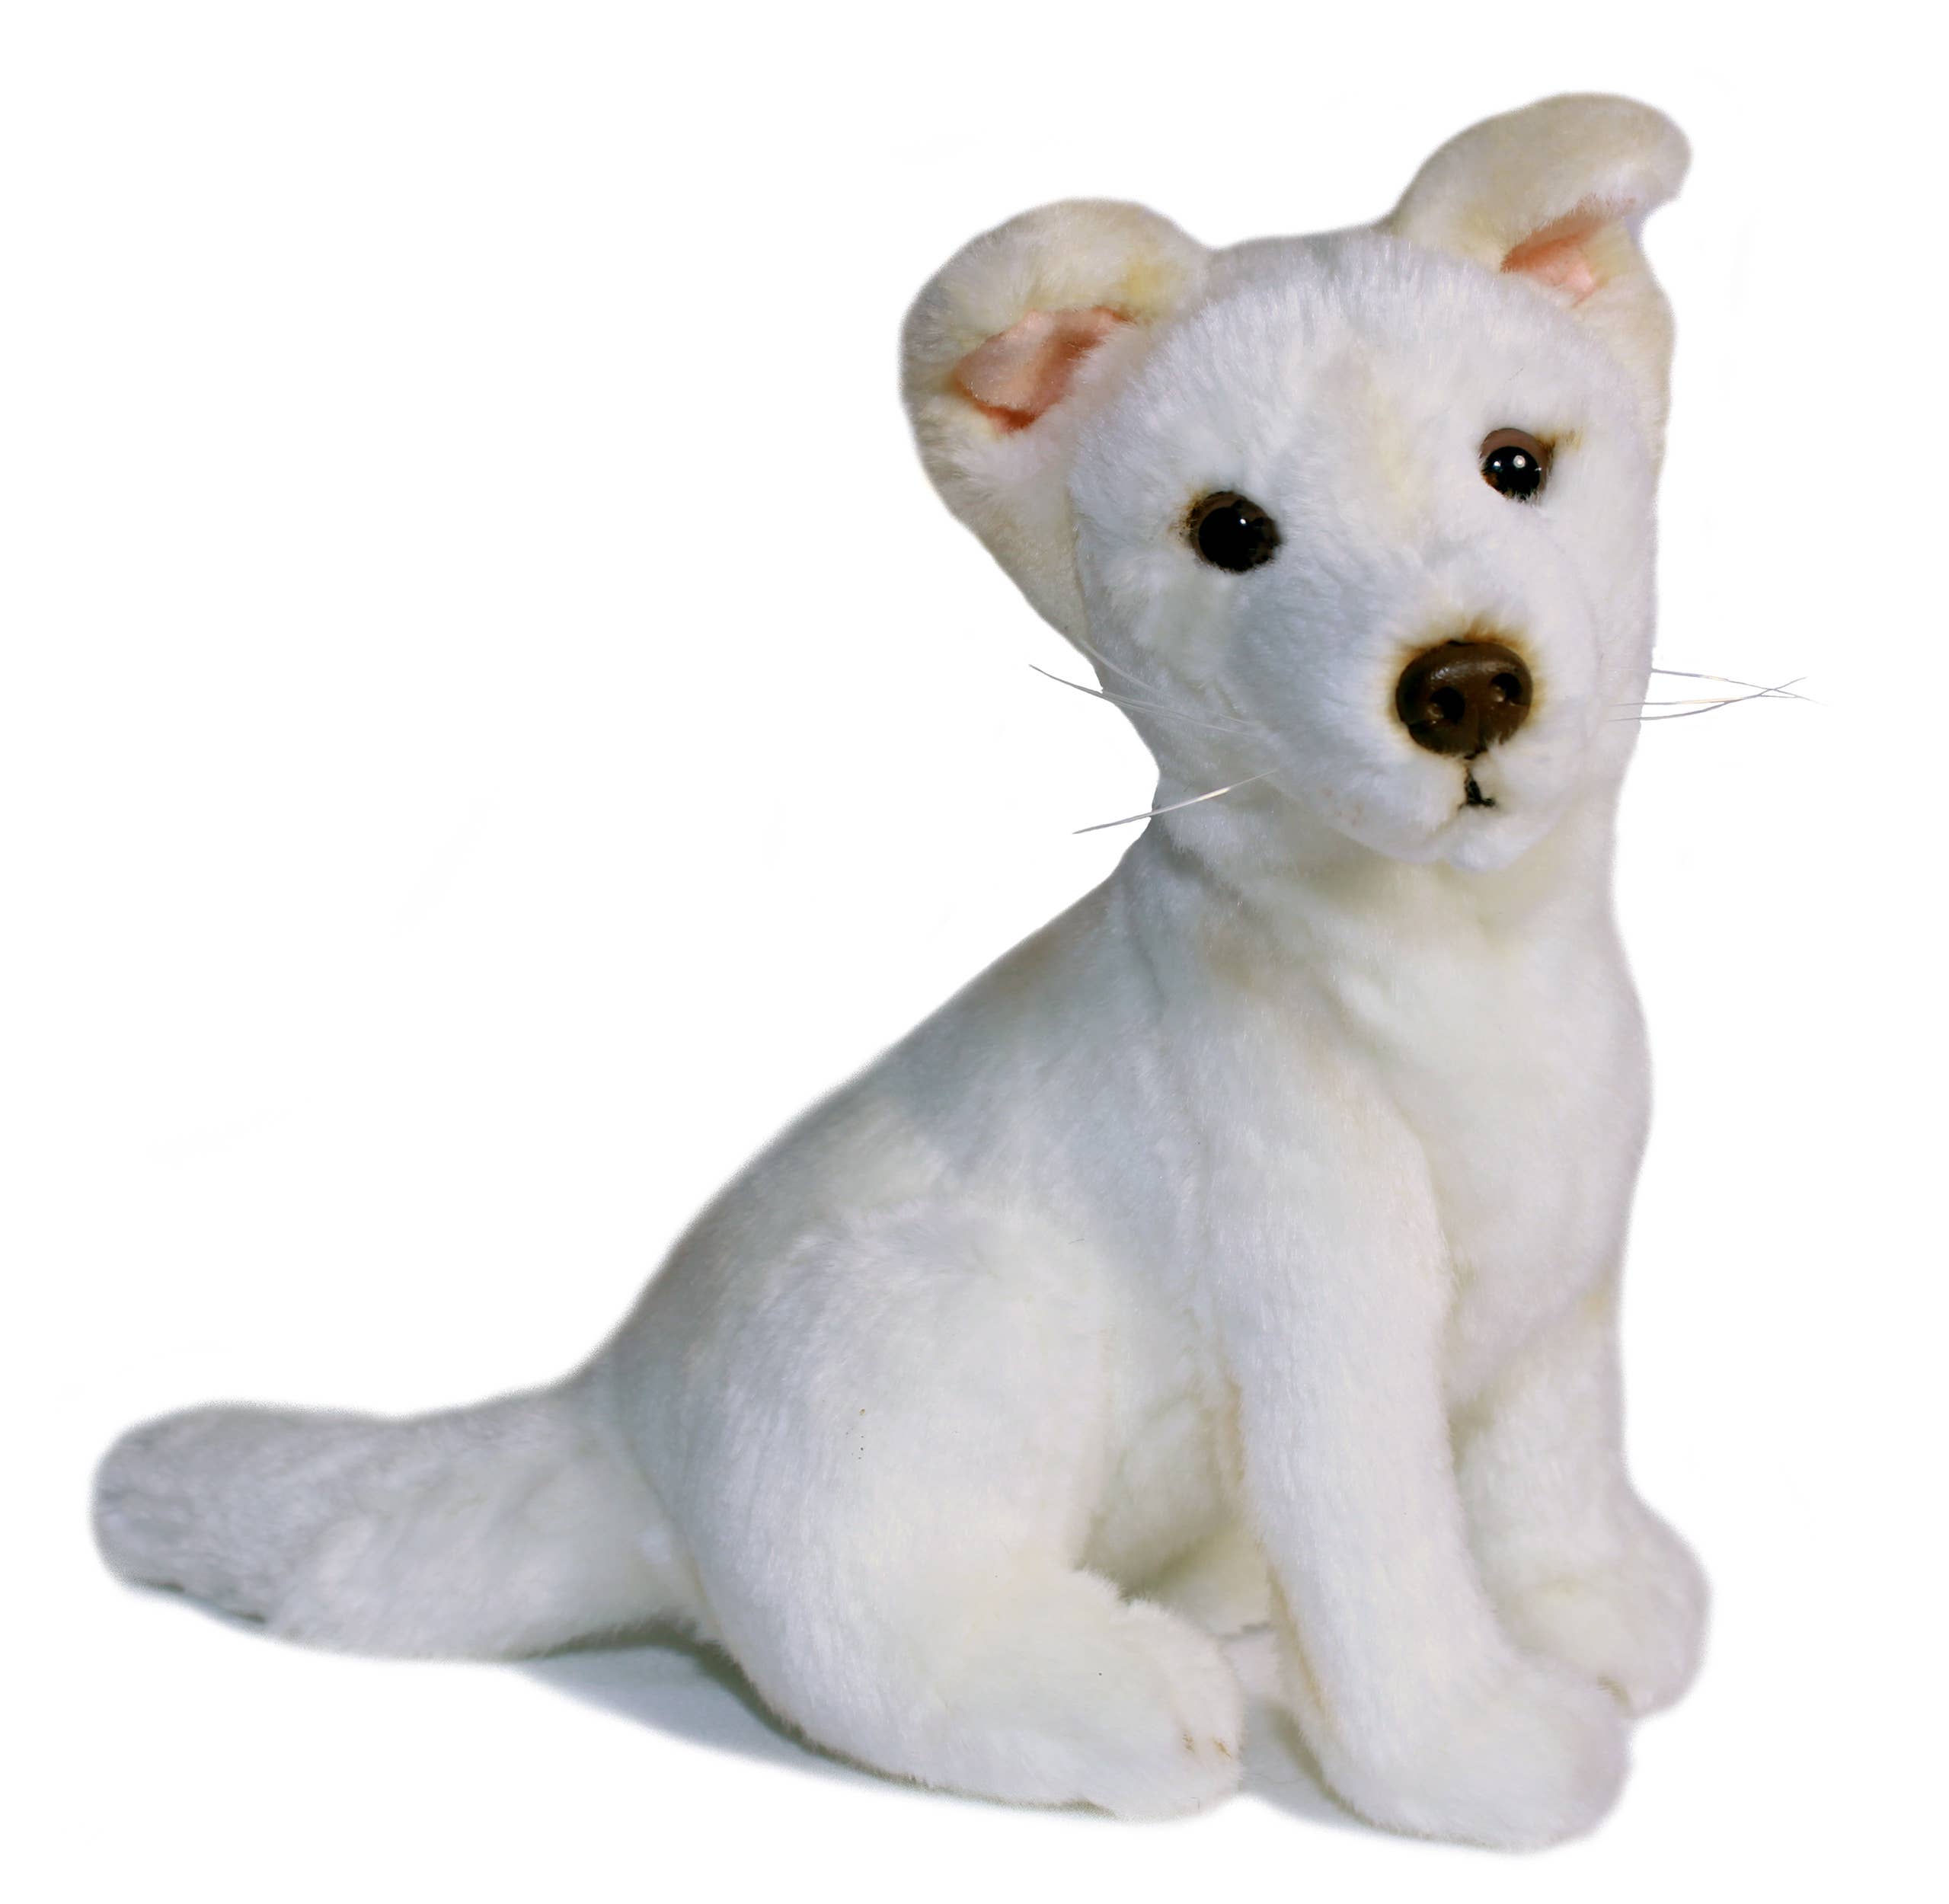 Creamy White Australian Dingo Small Size 25cm/10" Realistic Stuffed Animal